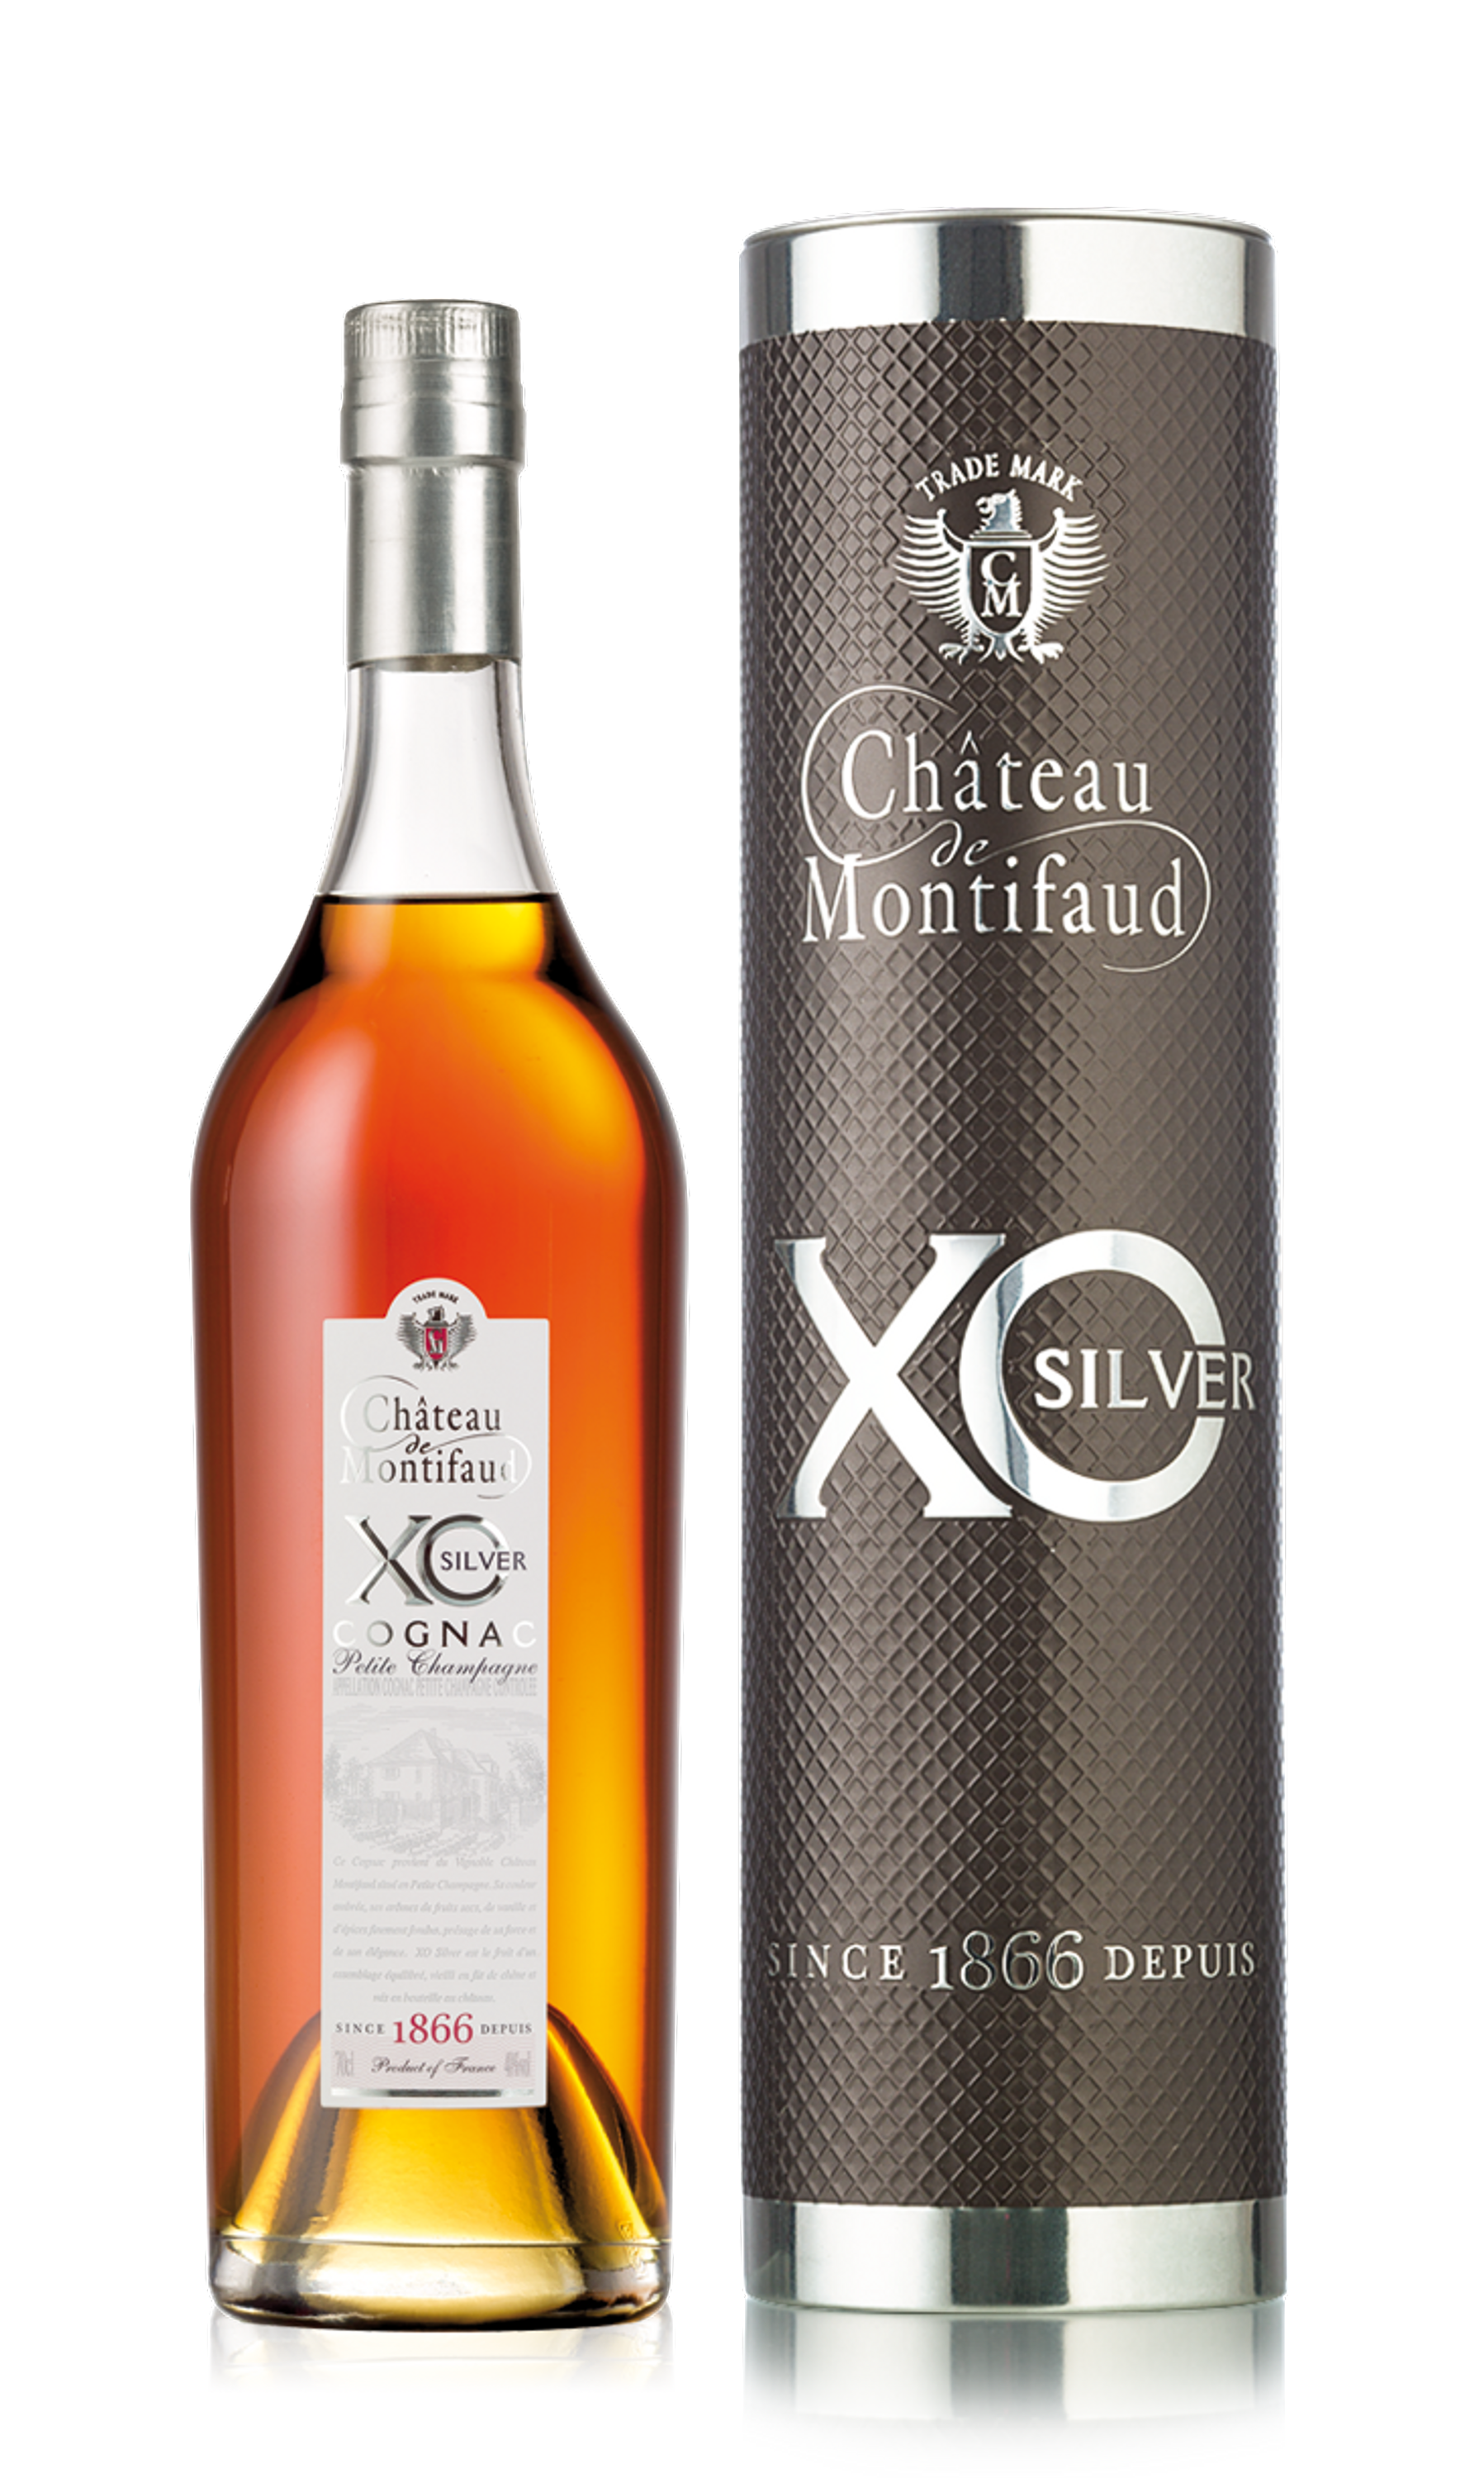 Chateau Montifaud XO Silver runde Dose 0,7l, alc. 40 Vol.-%, Cognac Frankreich